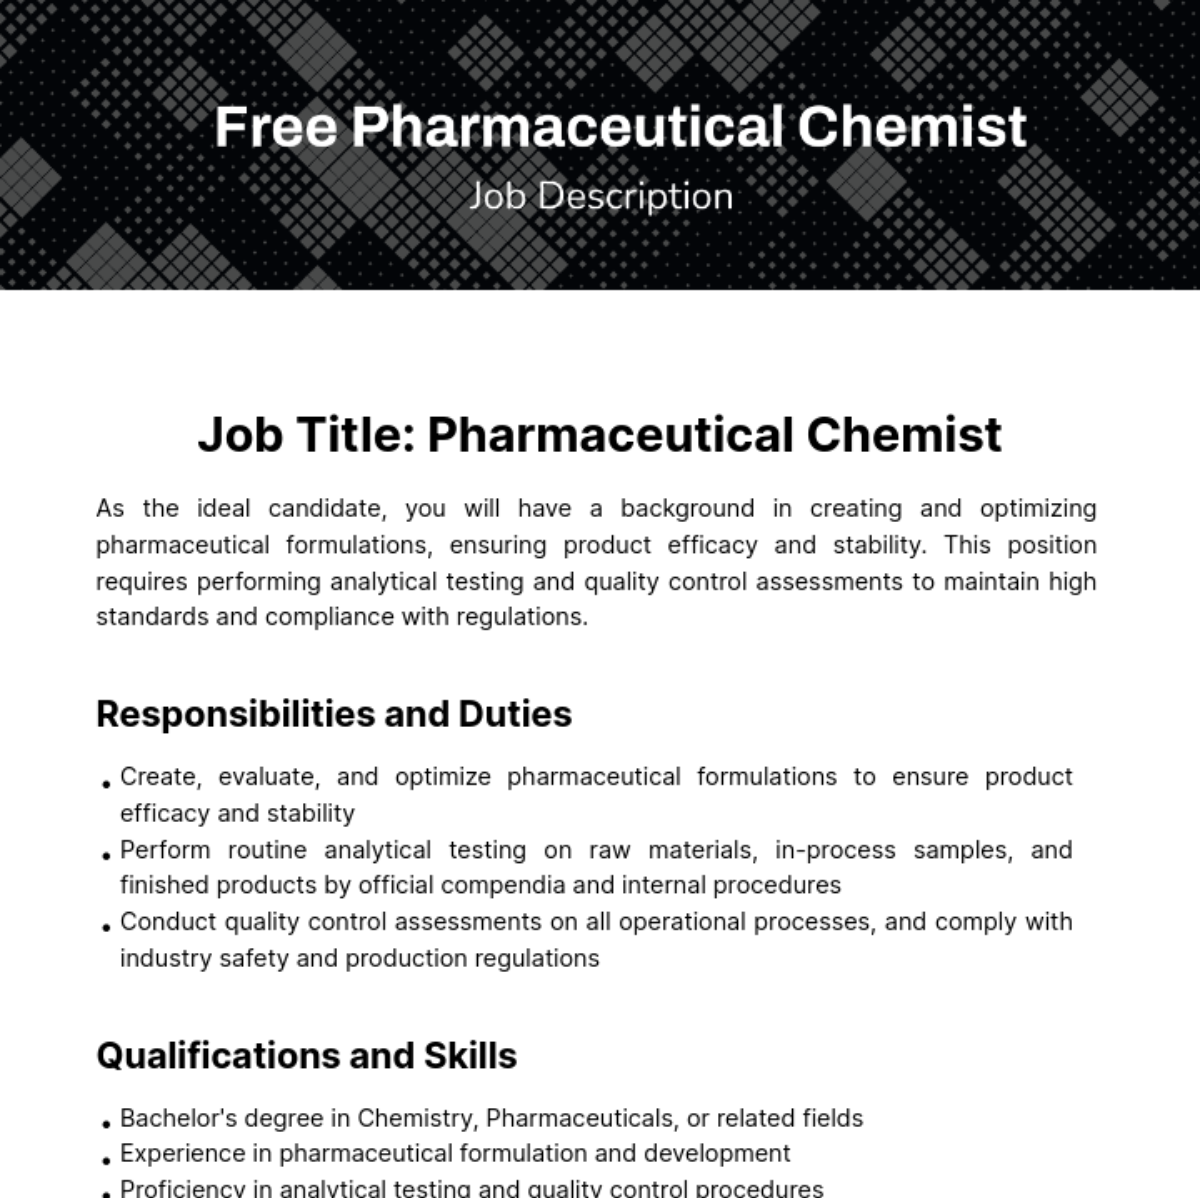 Free Pharmaceutical Chemist Job Description Template